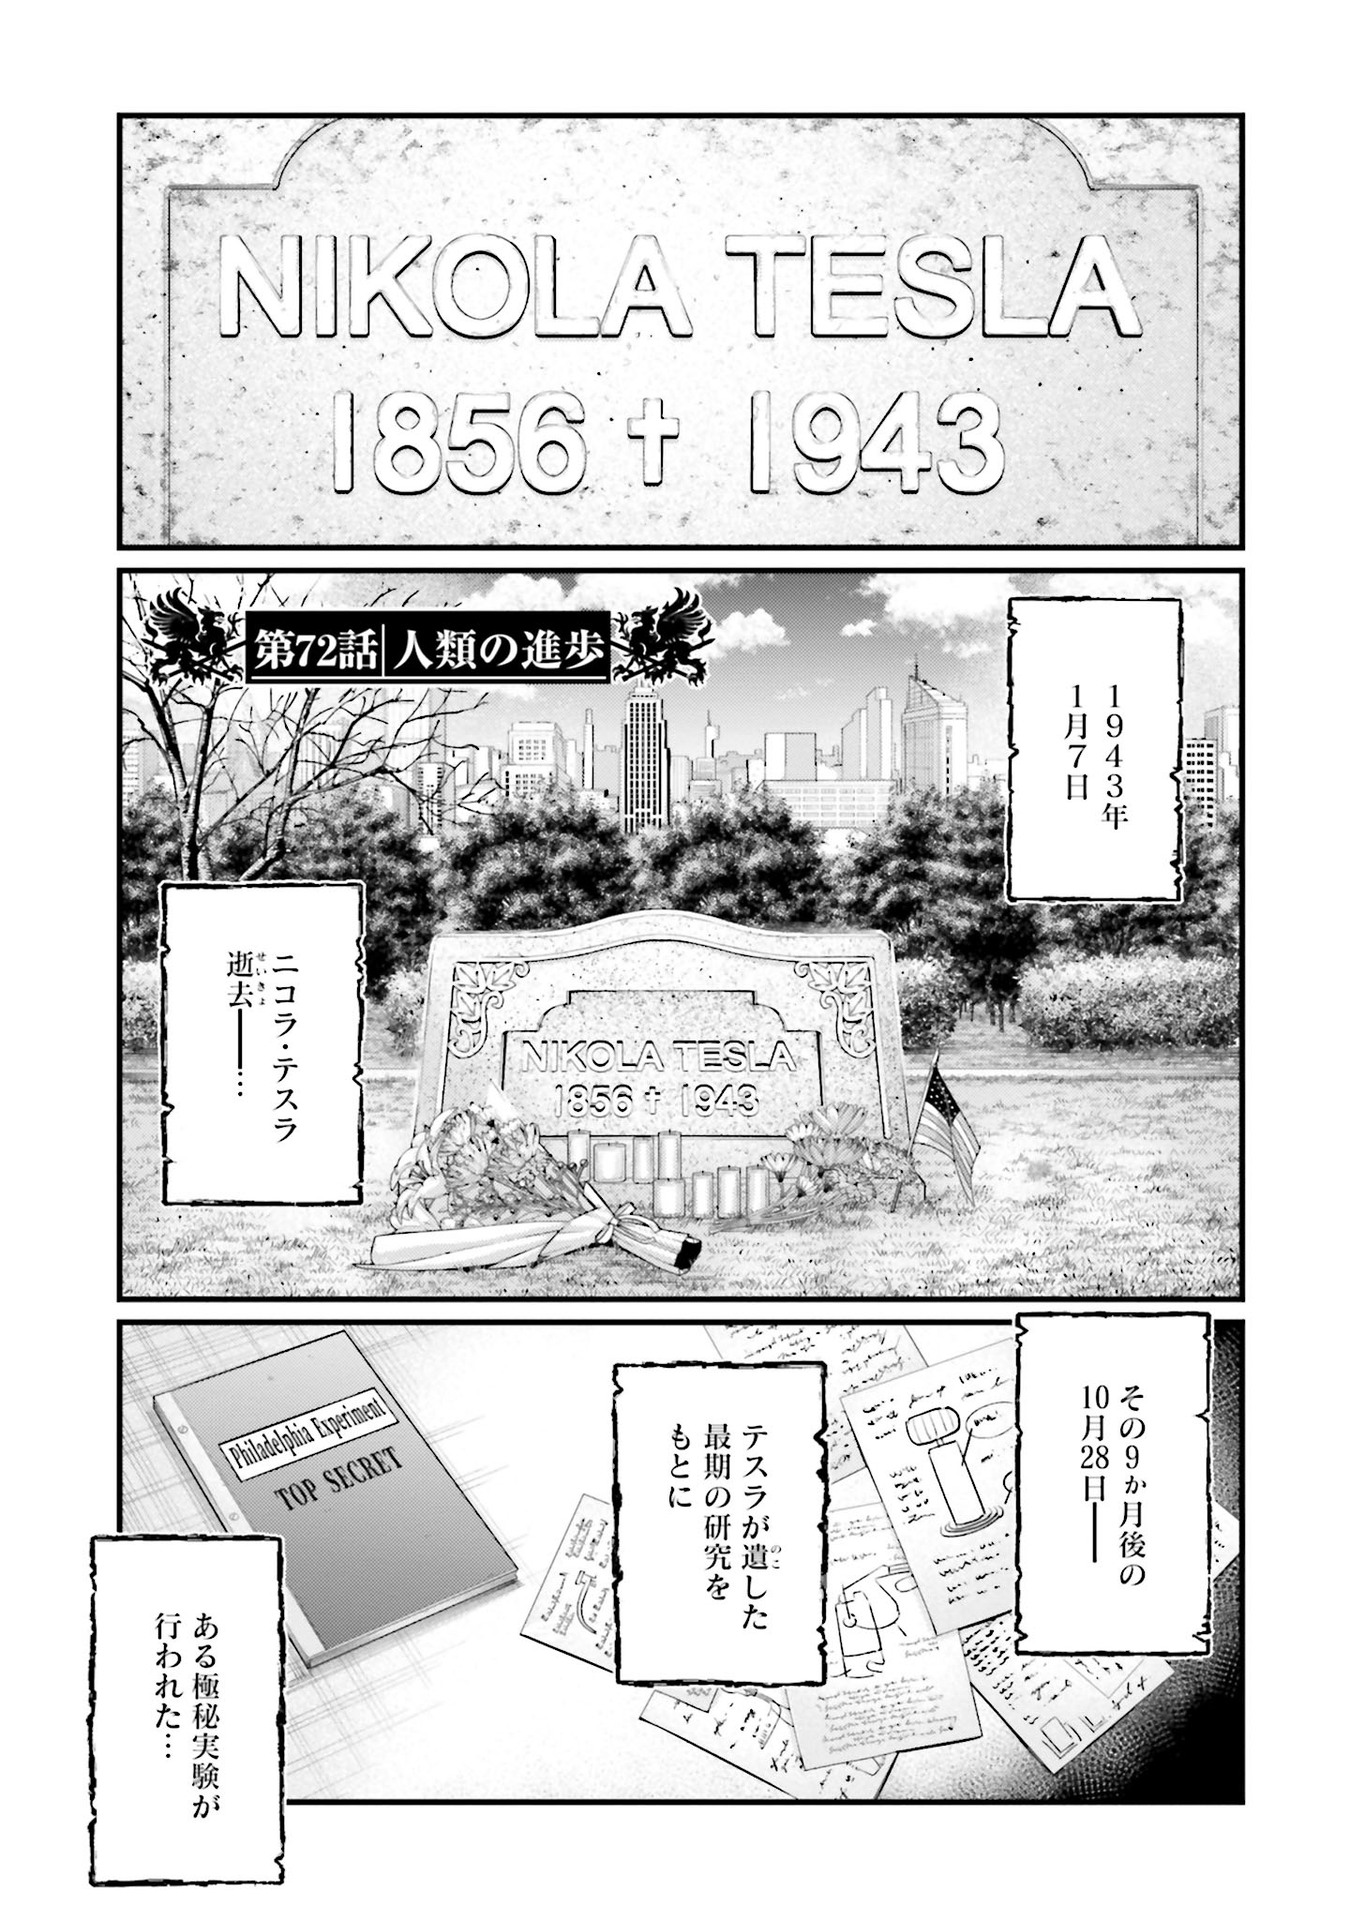 Read Shuumatsu no Valkyrie Manga English [New Chapters] Online